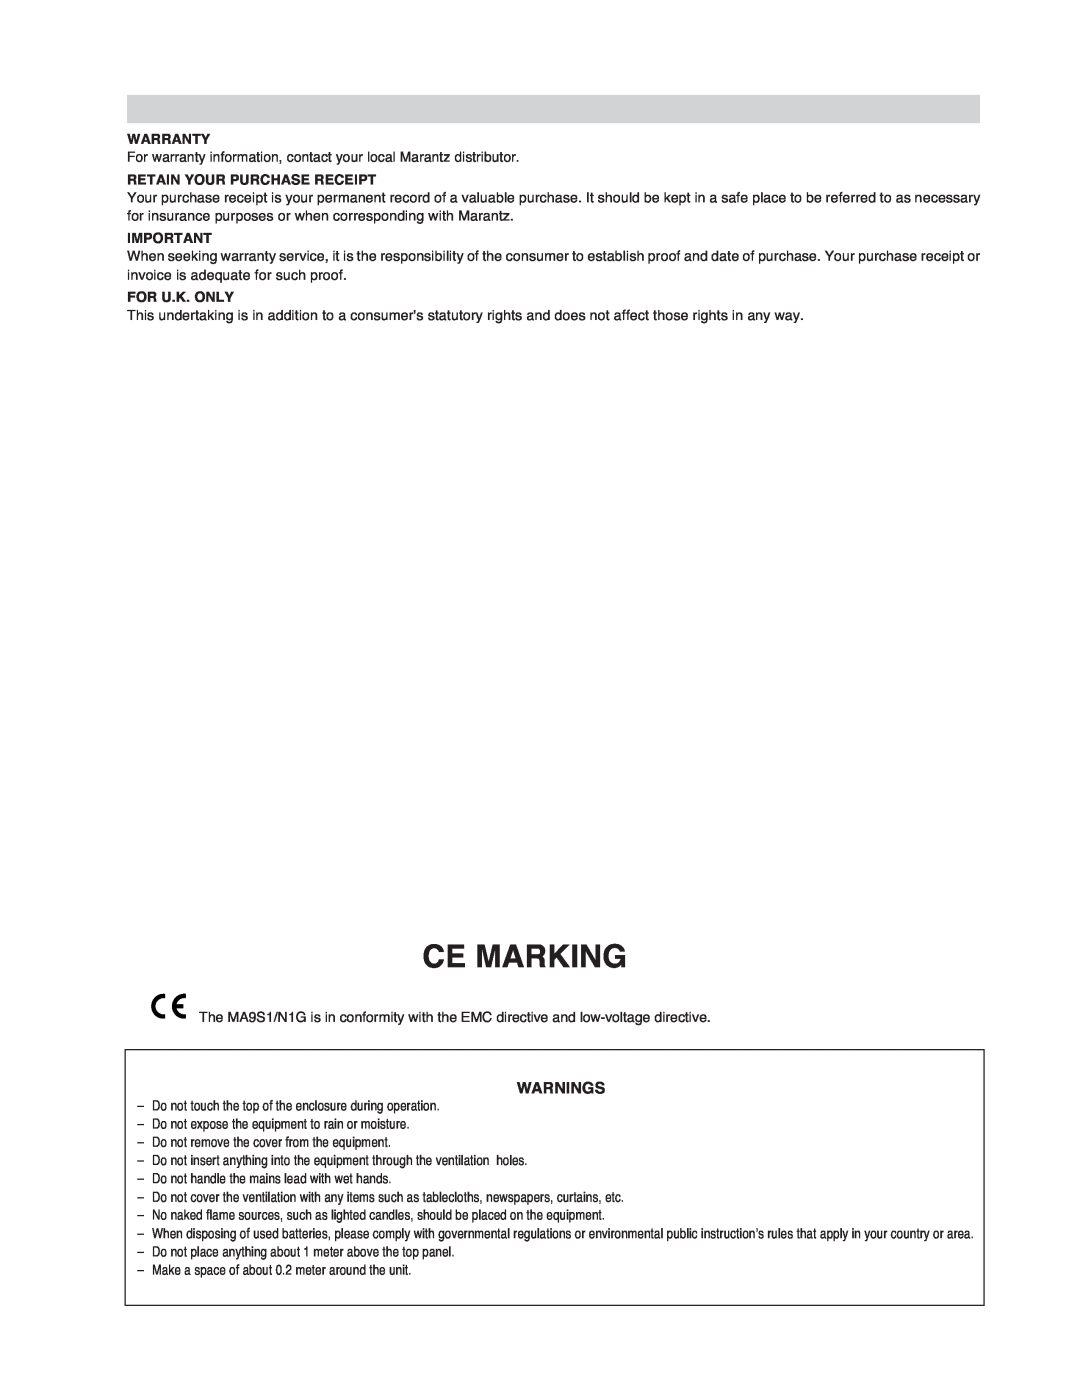 Marantz MA-9S1 manual Ce Marking, Warnings, Warranty, Retain Your Purchase Receipt, For U.K. Only 